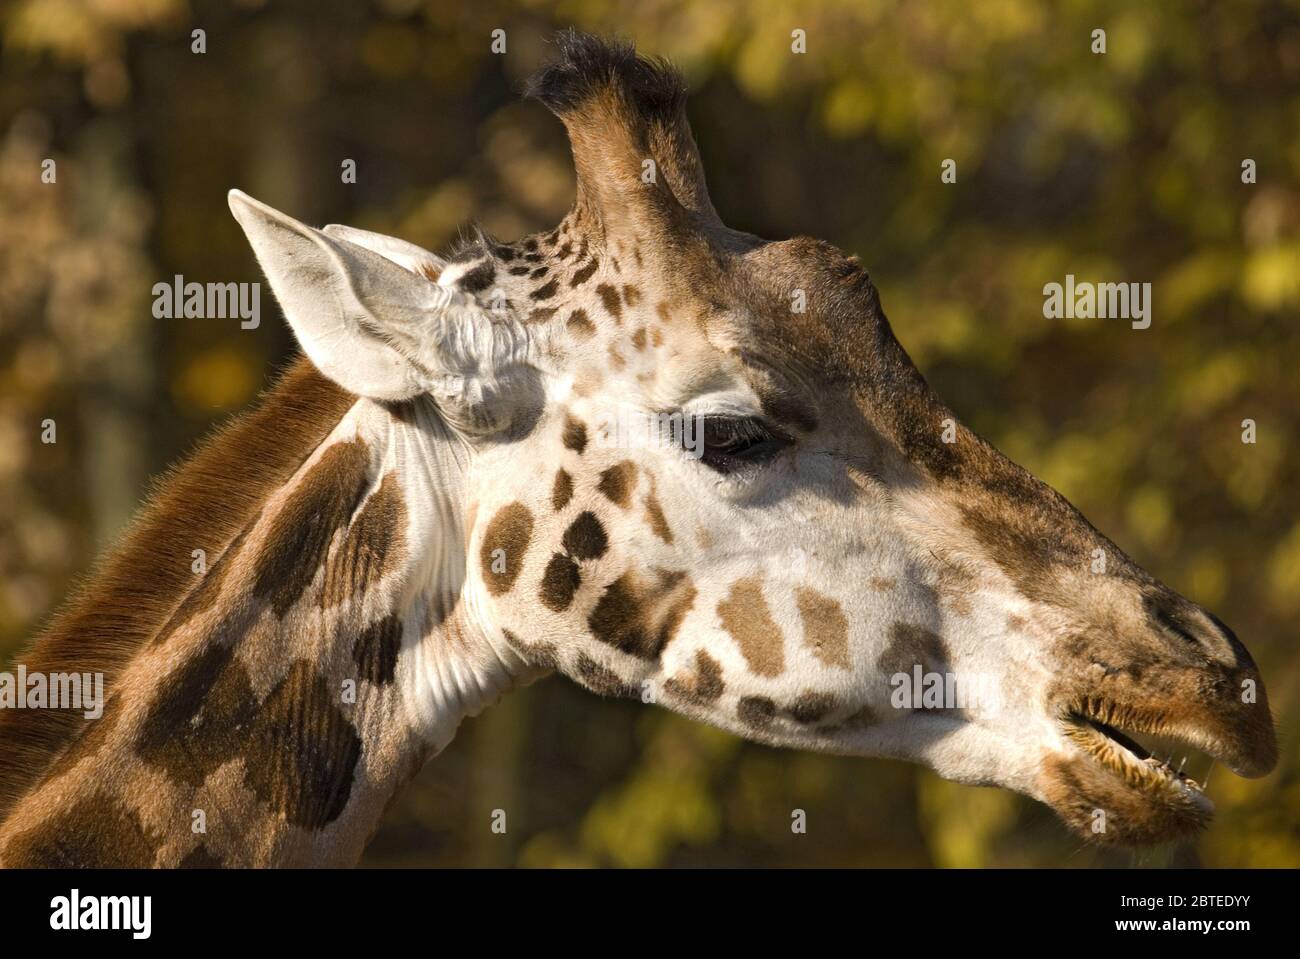 Girafe - Giraffa camelopardalis, potrait de girafé, safari au Kenya, en Afrique, membre mignon des cinq grands mammifères africains. Banque D'Images